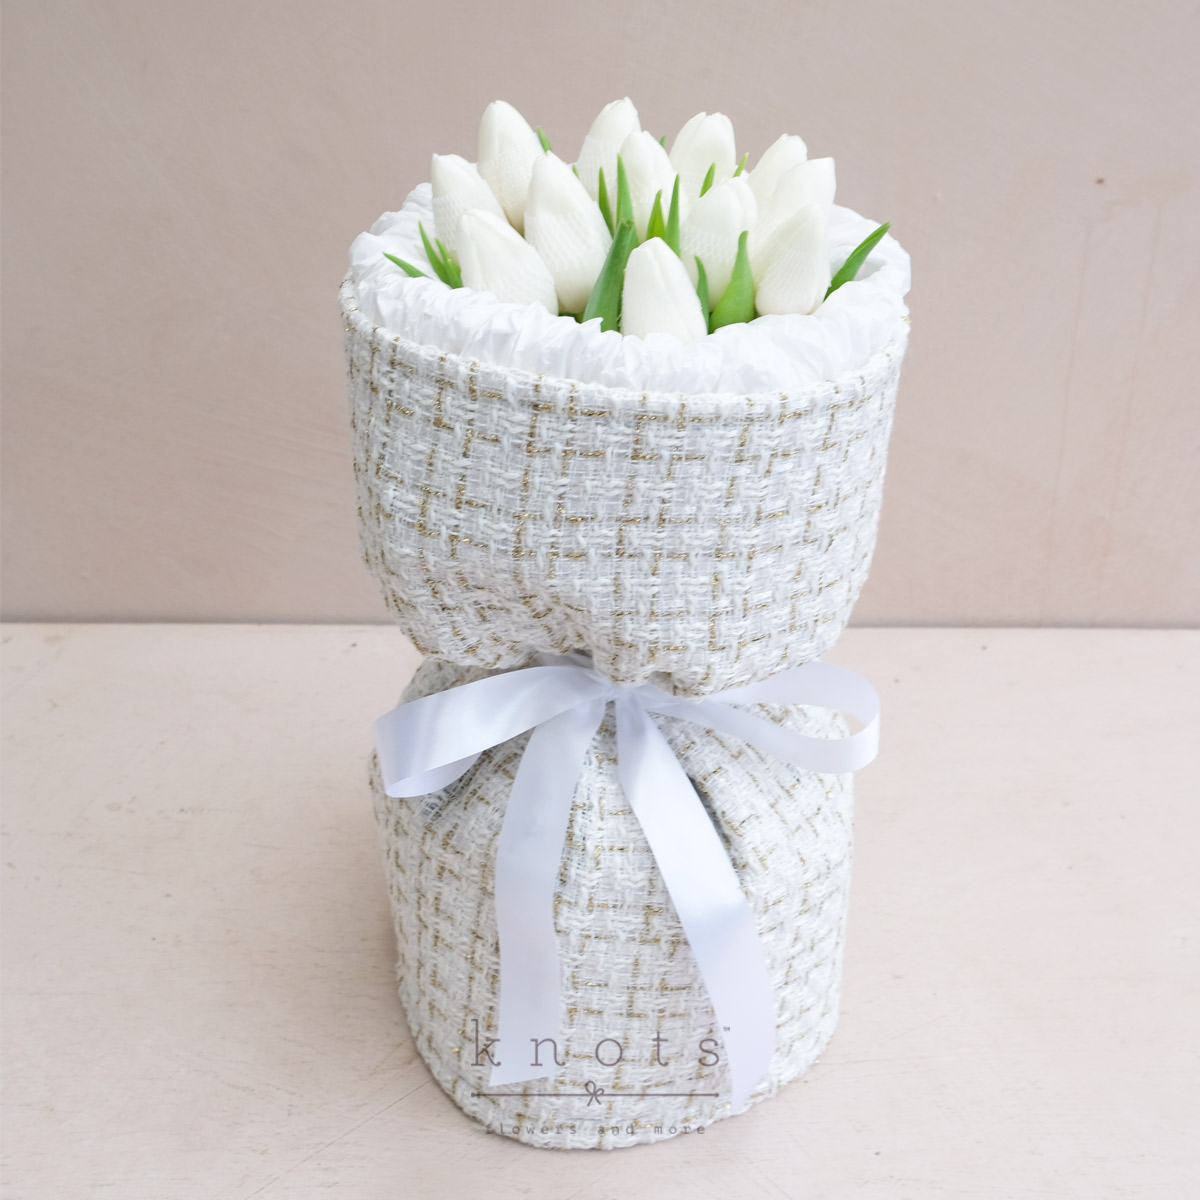 Secret Wishes (12 White Tulips Bouquet)